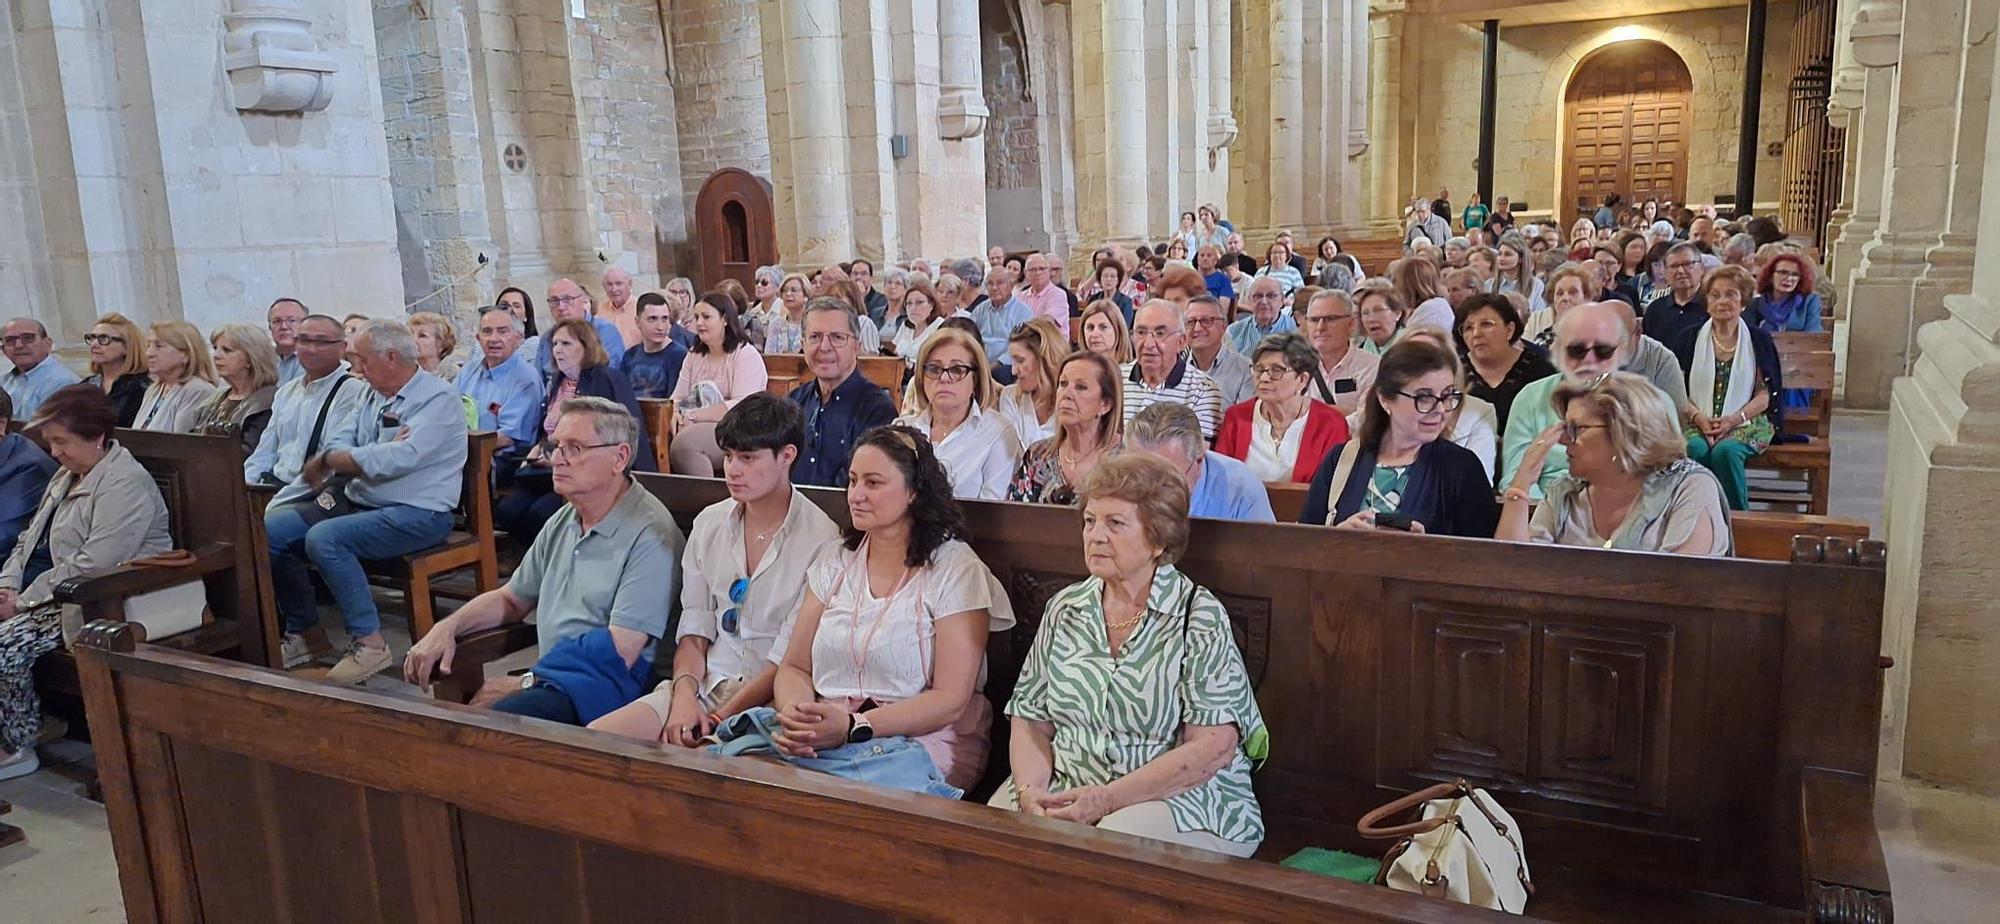 Las imágenes del homenaje  a Jaume I en Vila-real